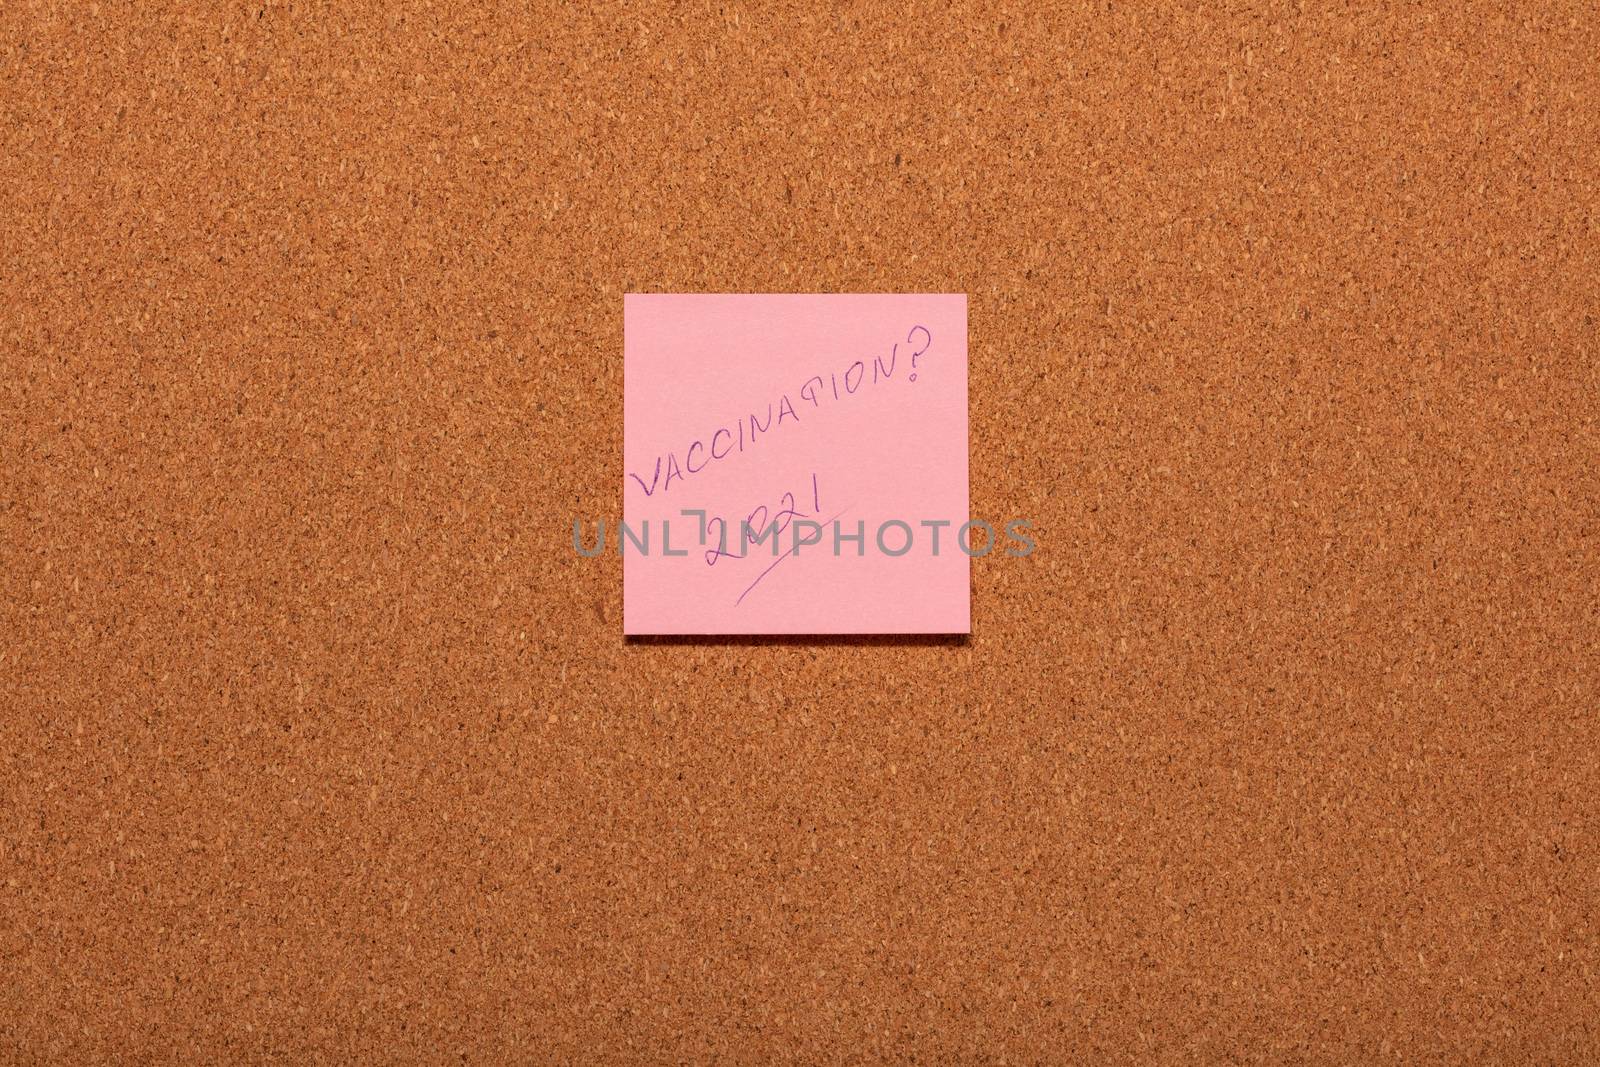 Vaccination 2021? handwritten on a pink sticker on a cork notice-board. by DamantisZ